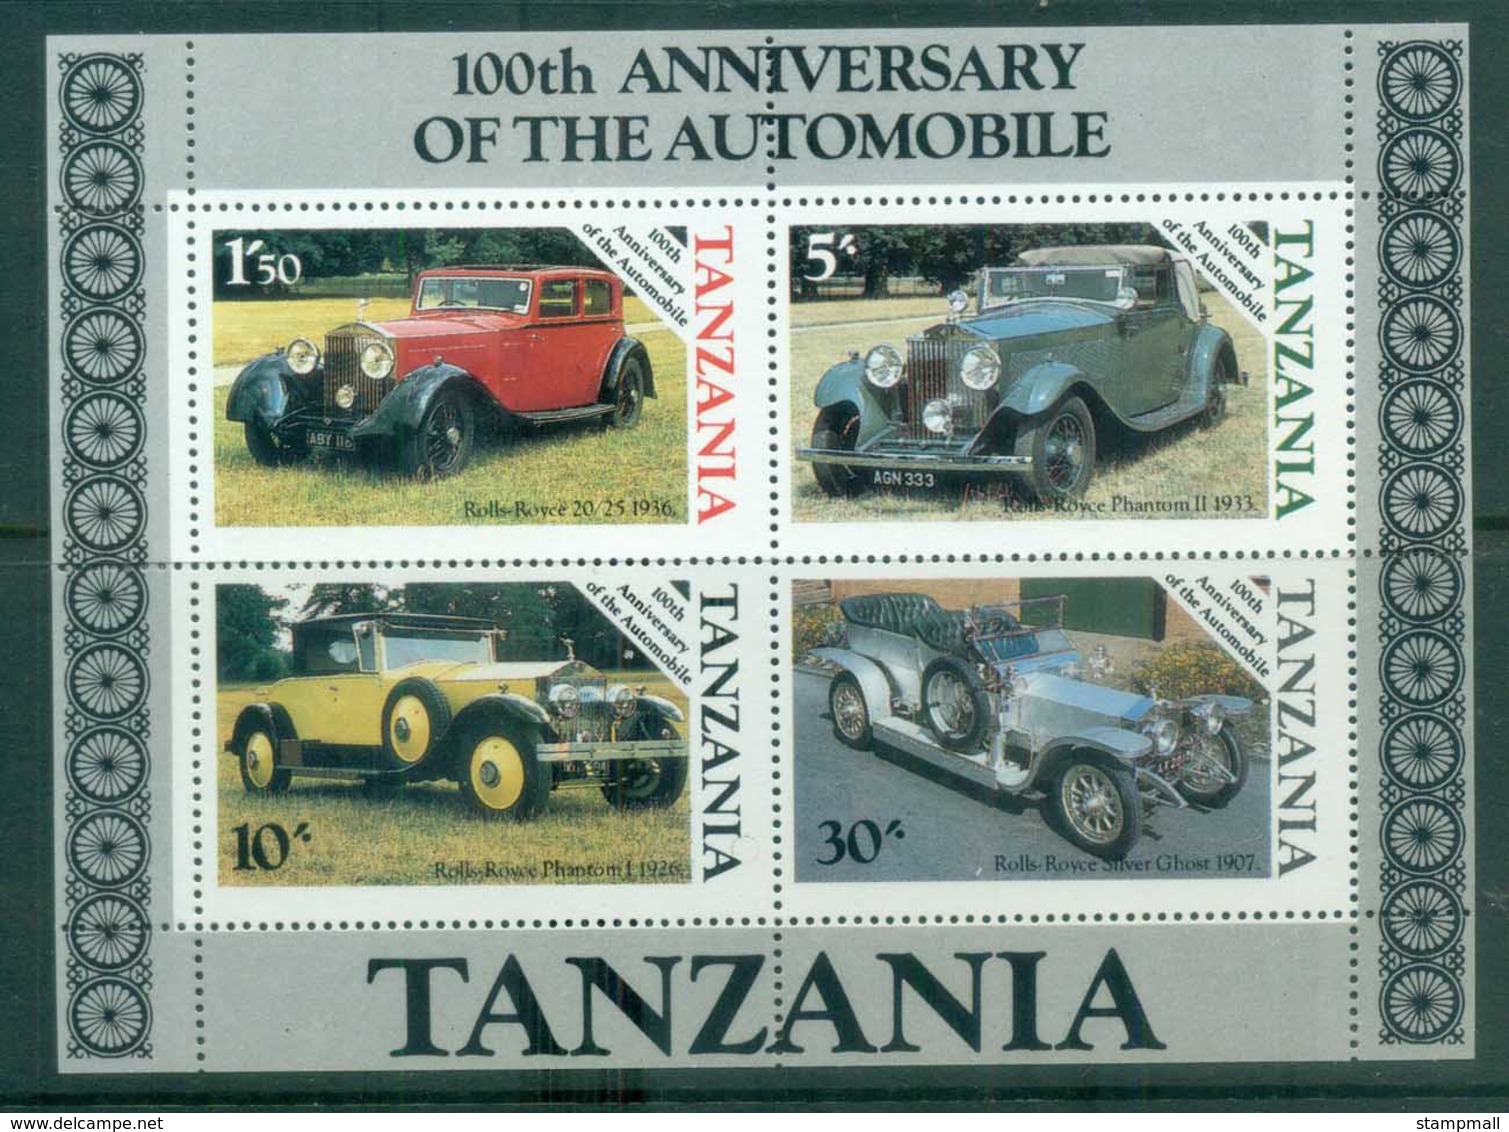 Tanzania 1986 Automobile Centenary MS Lot84781 - Swaziland (1968-...)